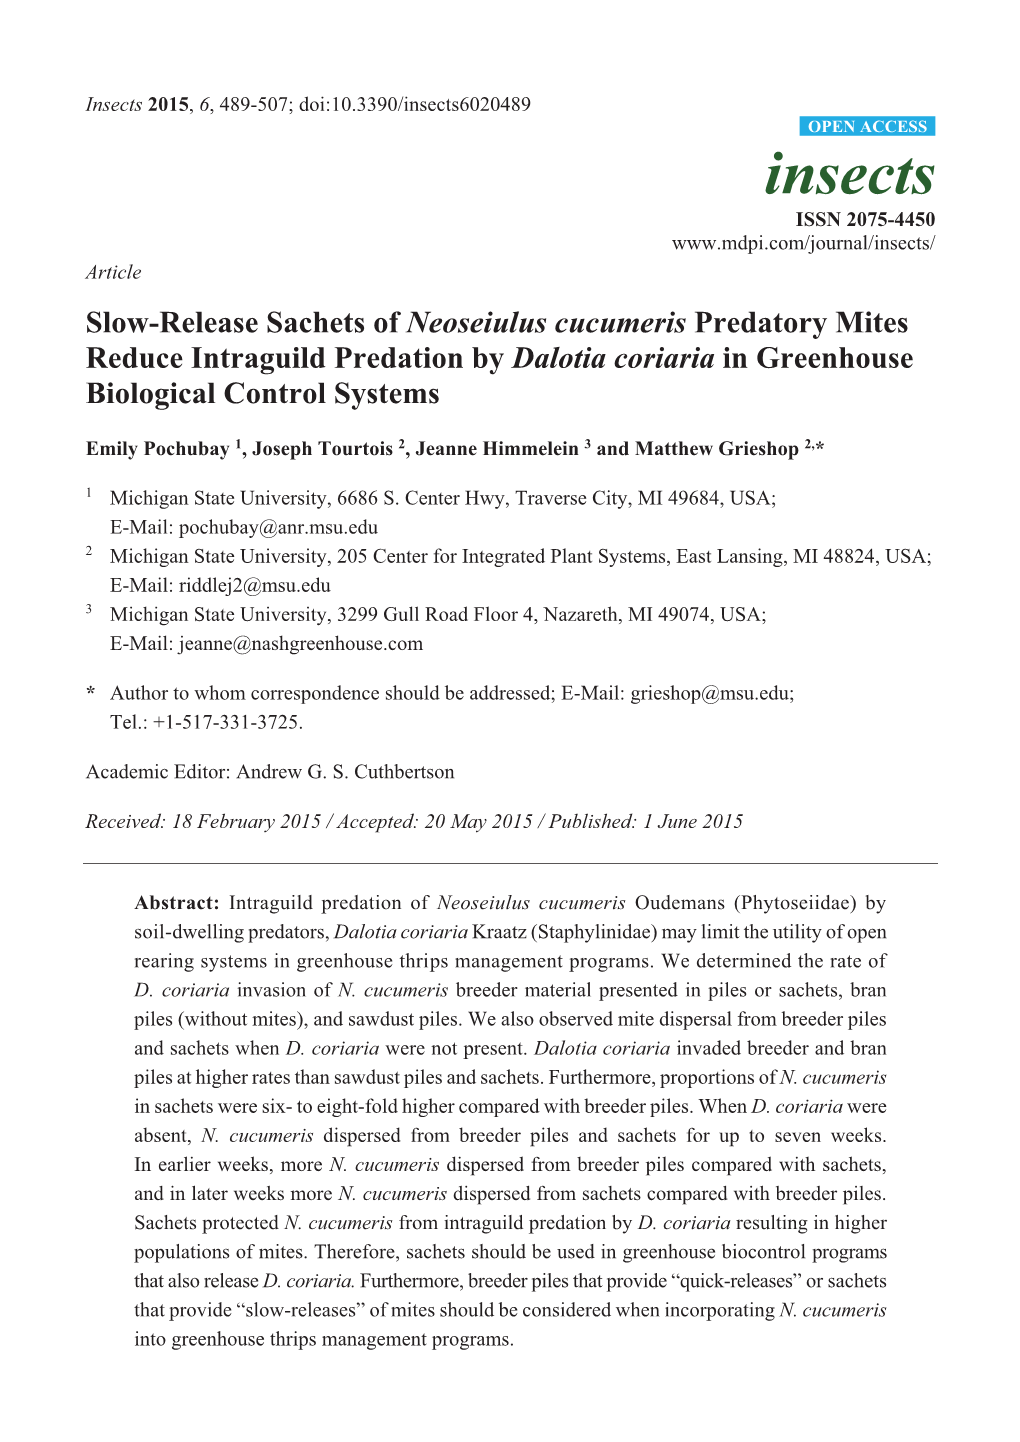 Slow-Release Sachets of Neoseiulus Cucumeris Predatory Mites Reduce Intraguild Predation by Dalotia Coriaria in Greenhouse Biological Control Systems